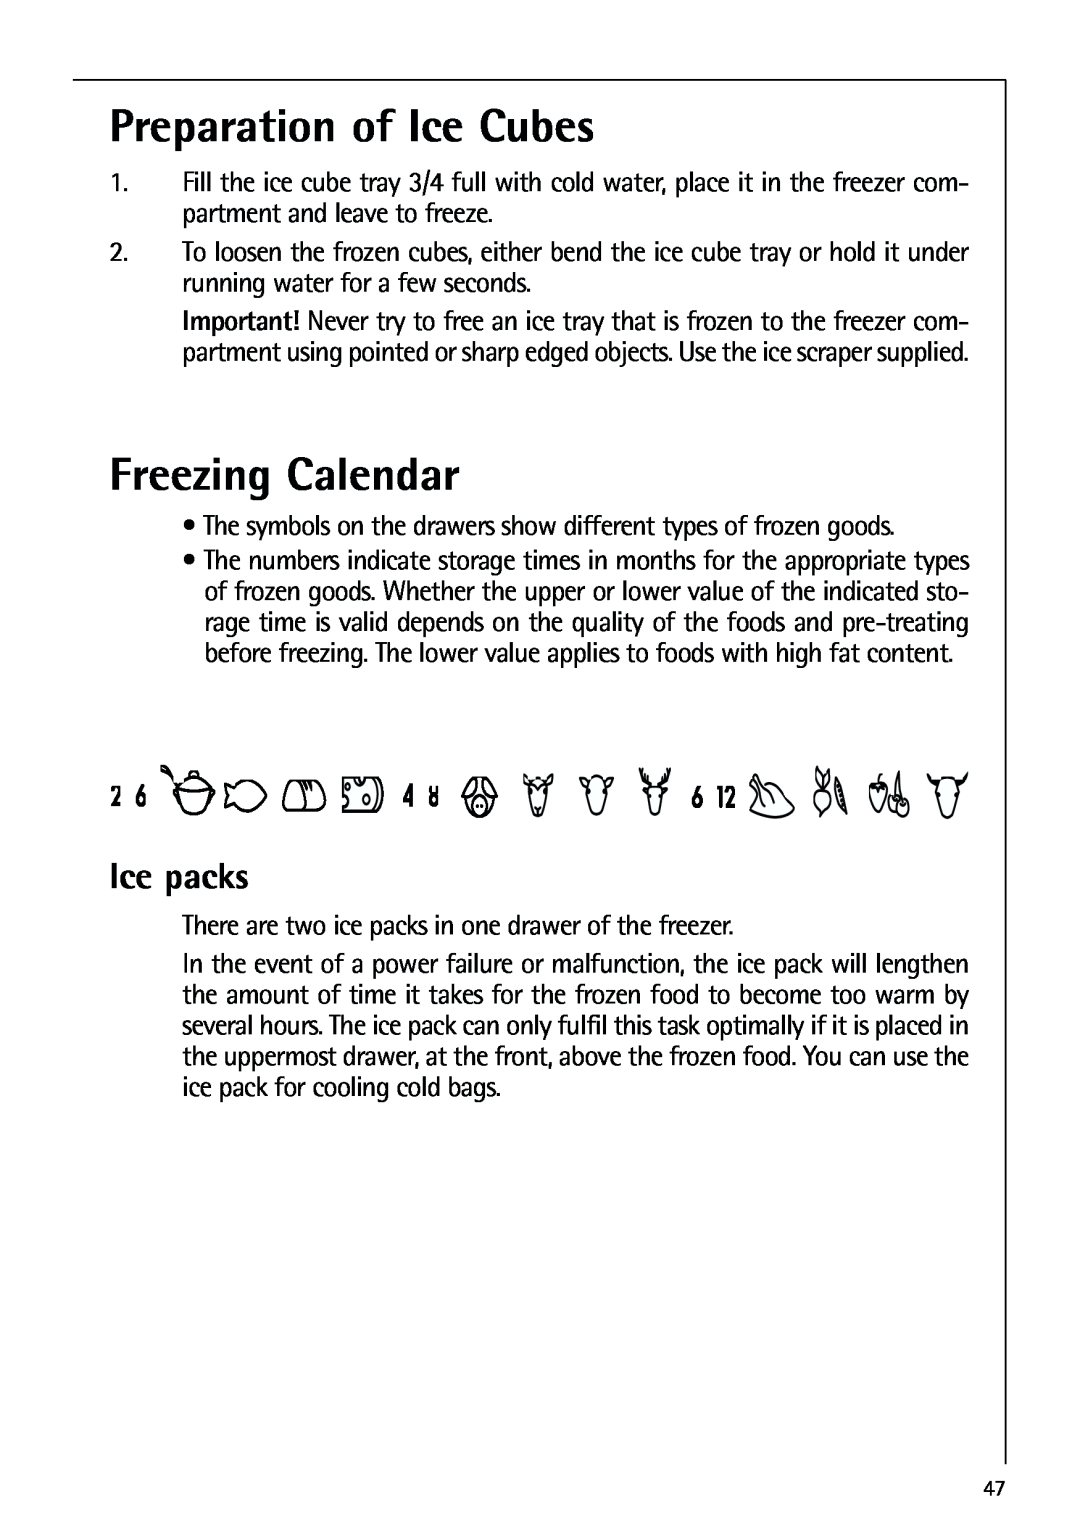 AEG 80318-5 KG user manual Preparation of Ice Cubes, Freezing Calendar, Ice packs 